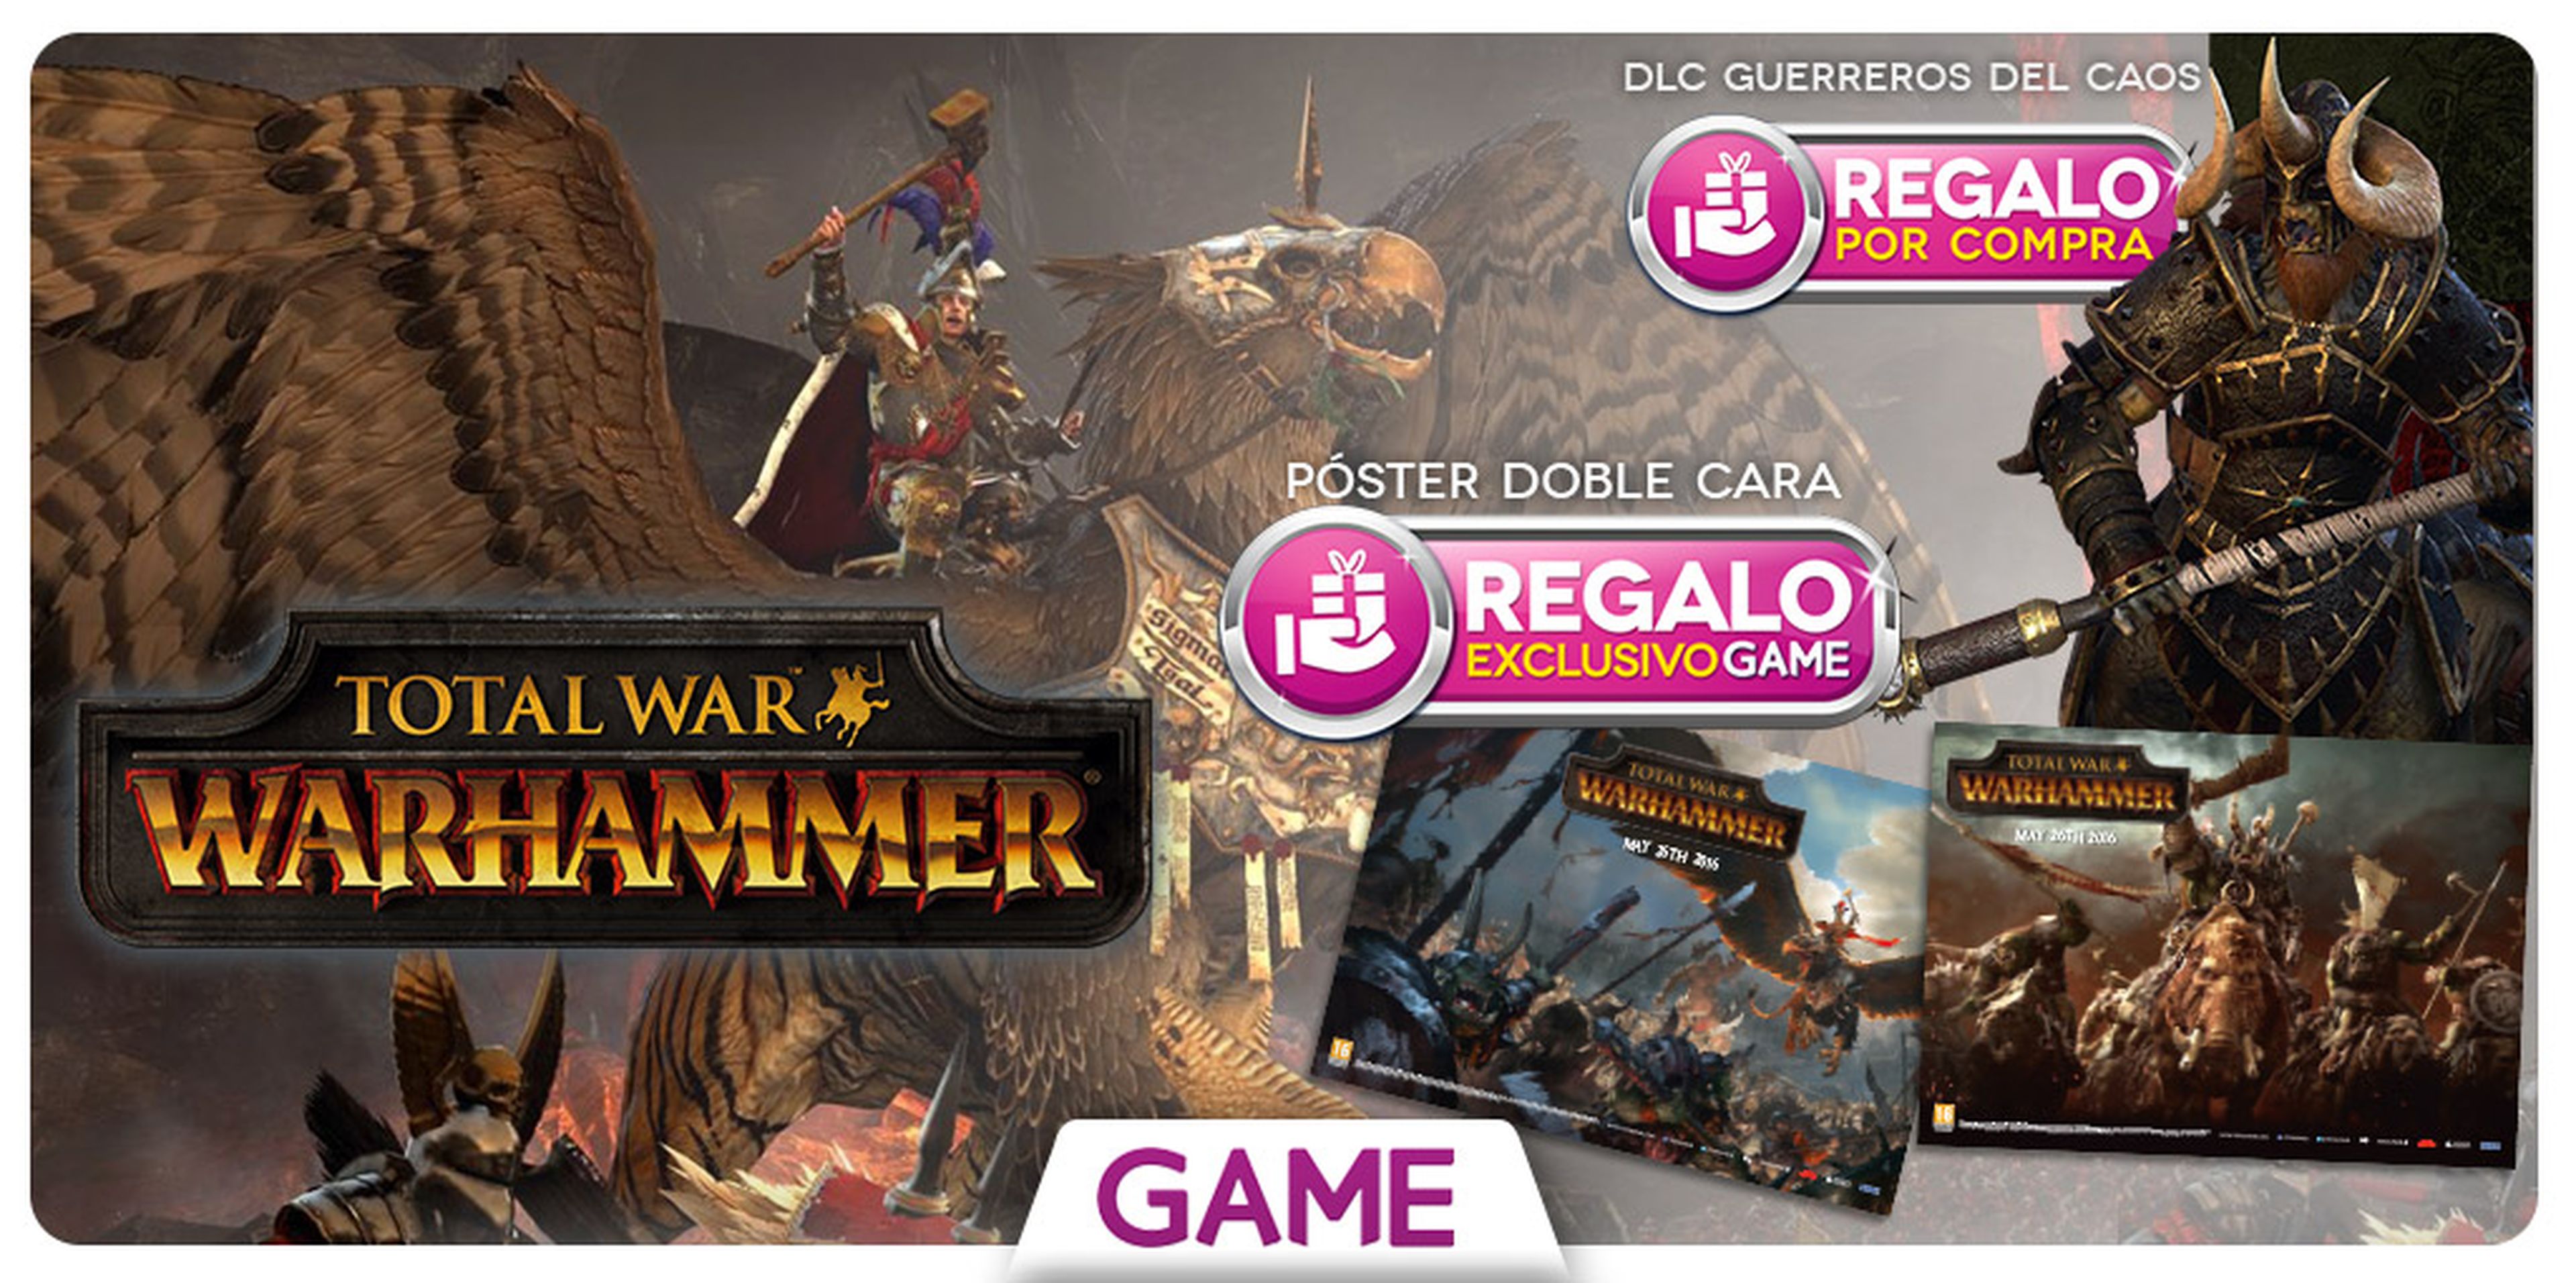 Total War Warhammer - Regalo exclusivo en GAME